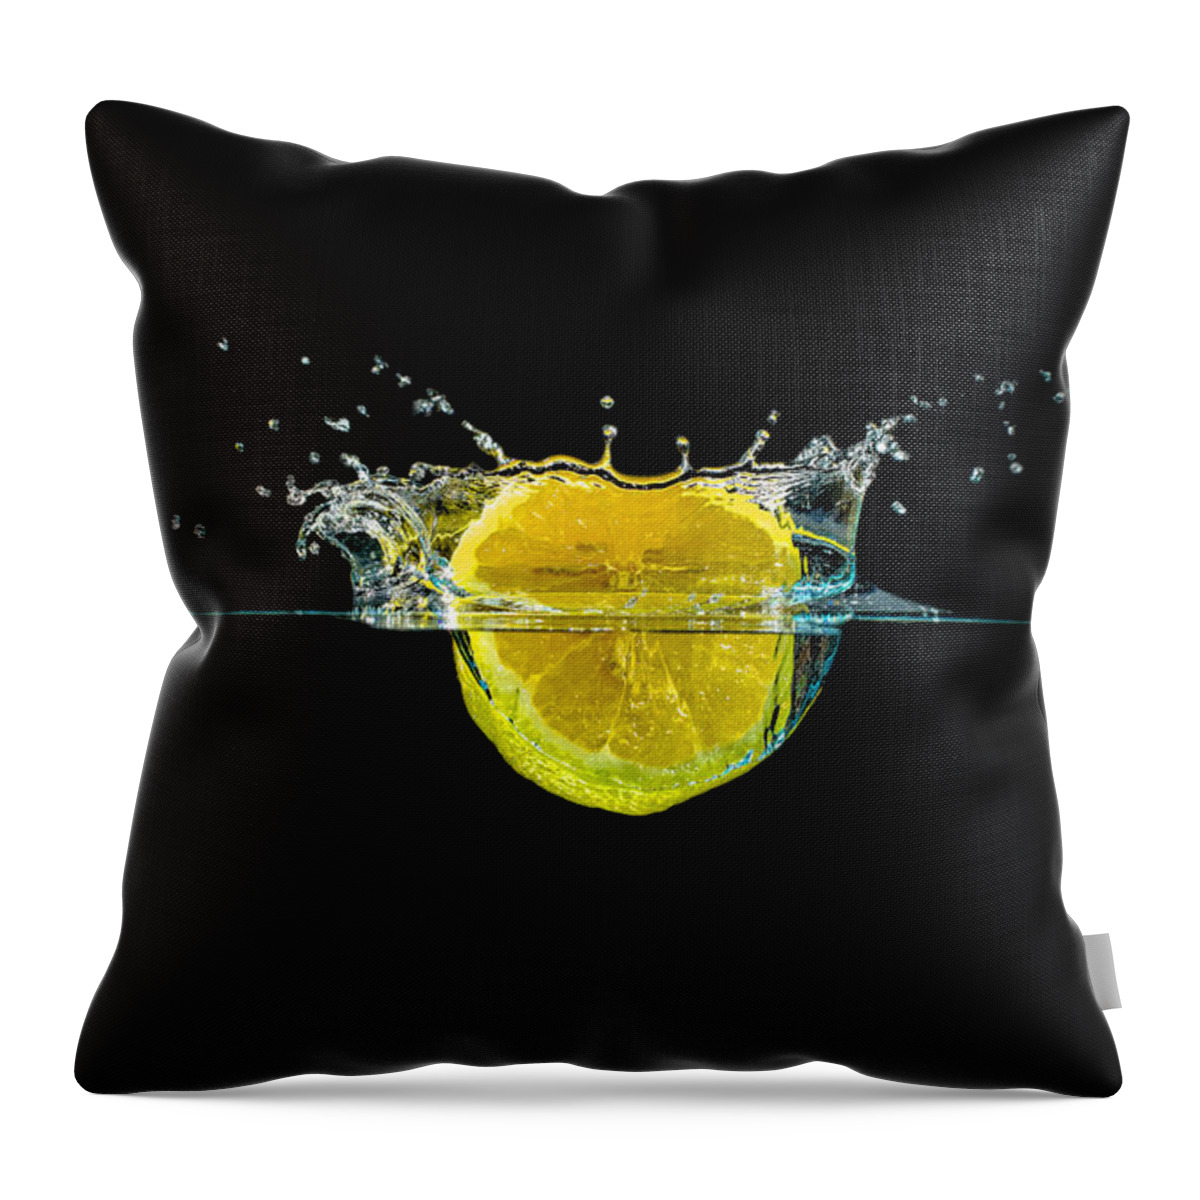 Beverage Throw Pillow featuring the photograph Splashing Lemon #3 by Peter Lakomy